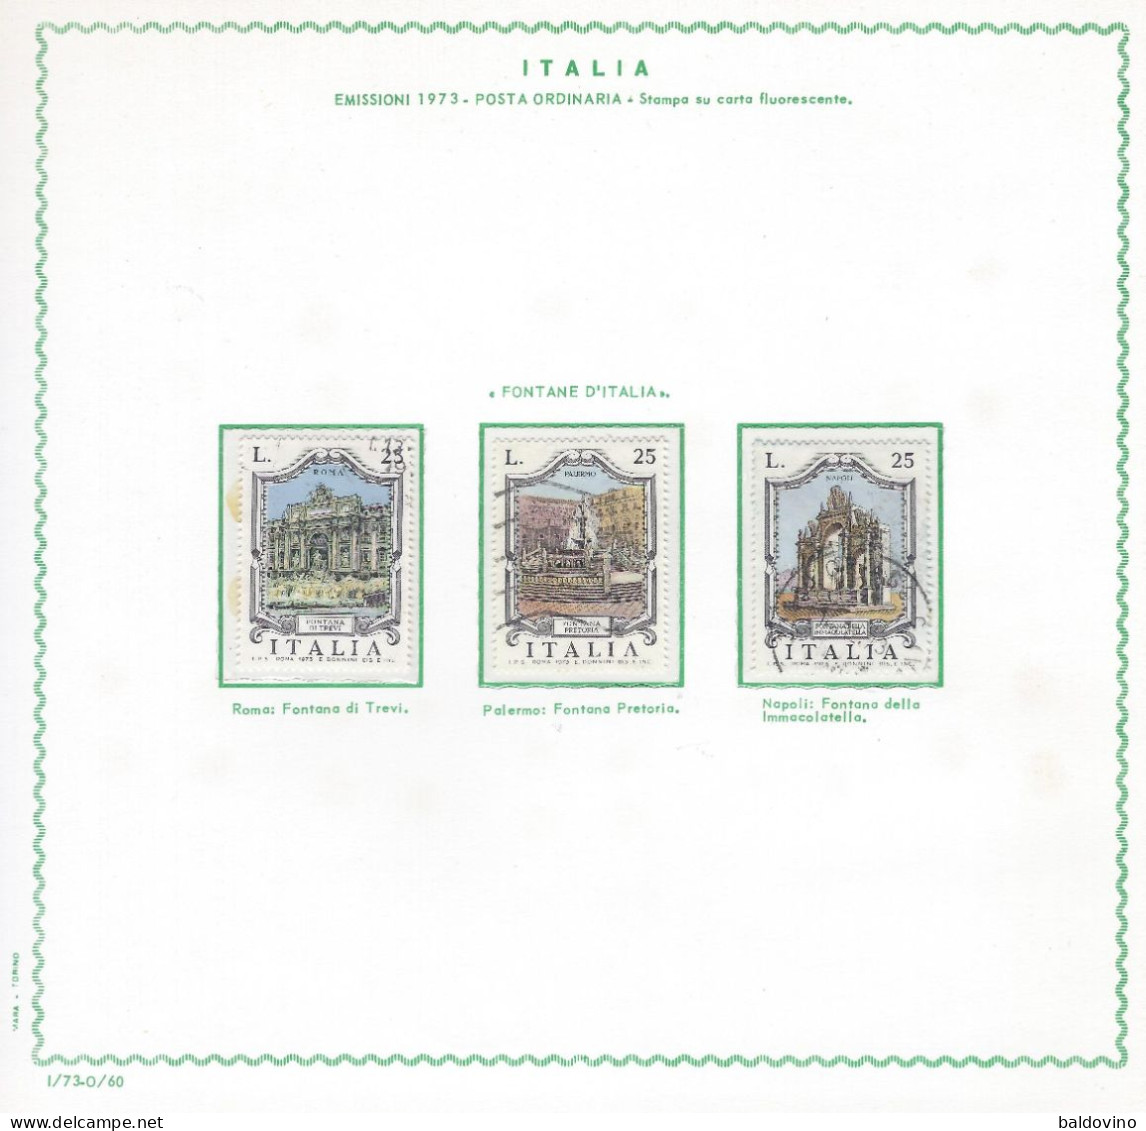 Italia 1973 Annata completa usata 45 valori - fogli d'album non compresi